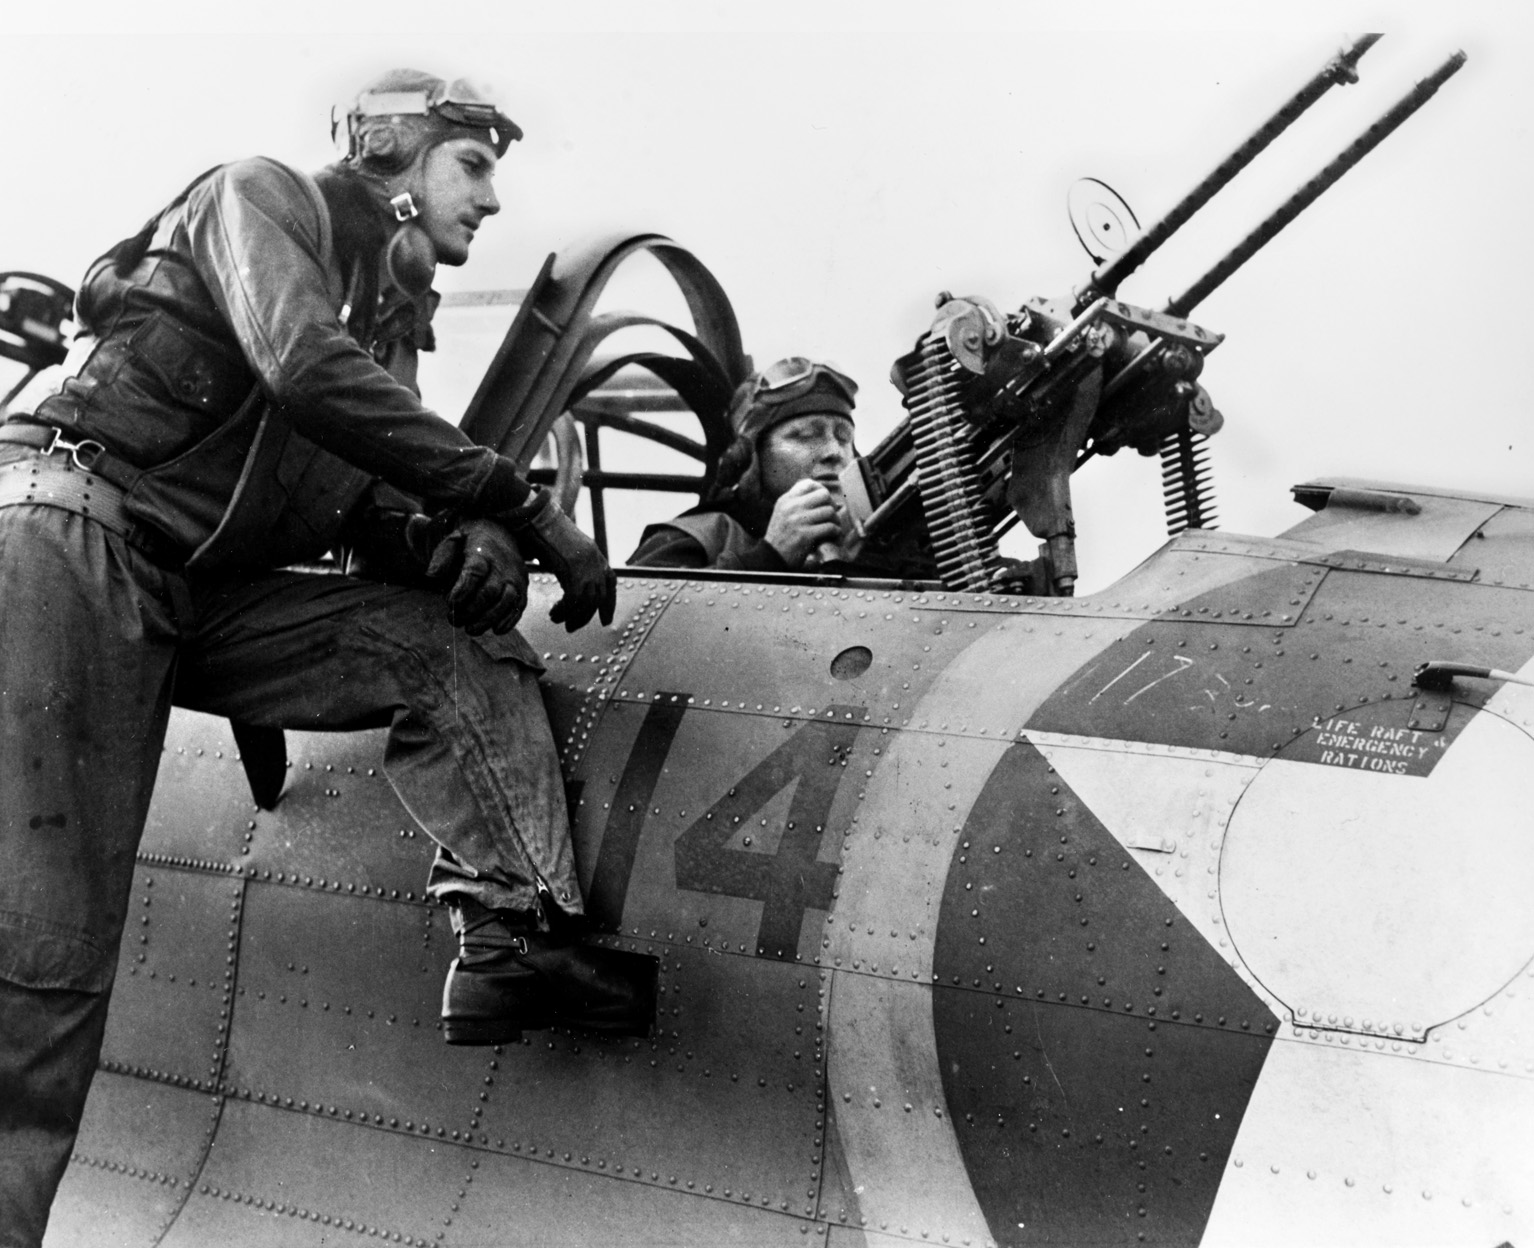 Lieutenant (jg) Woodie L. McVay Jr. watches as radio-gunner K. W. Jobe tests the rear-facing, .30-caliber machine-gun system on their SBD-3 Dauntless dive bomber during Operation Torch.